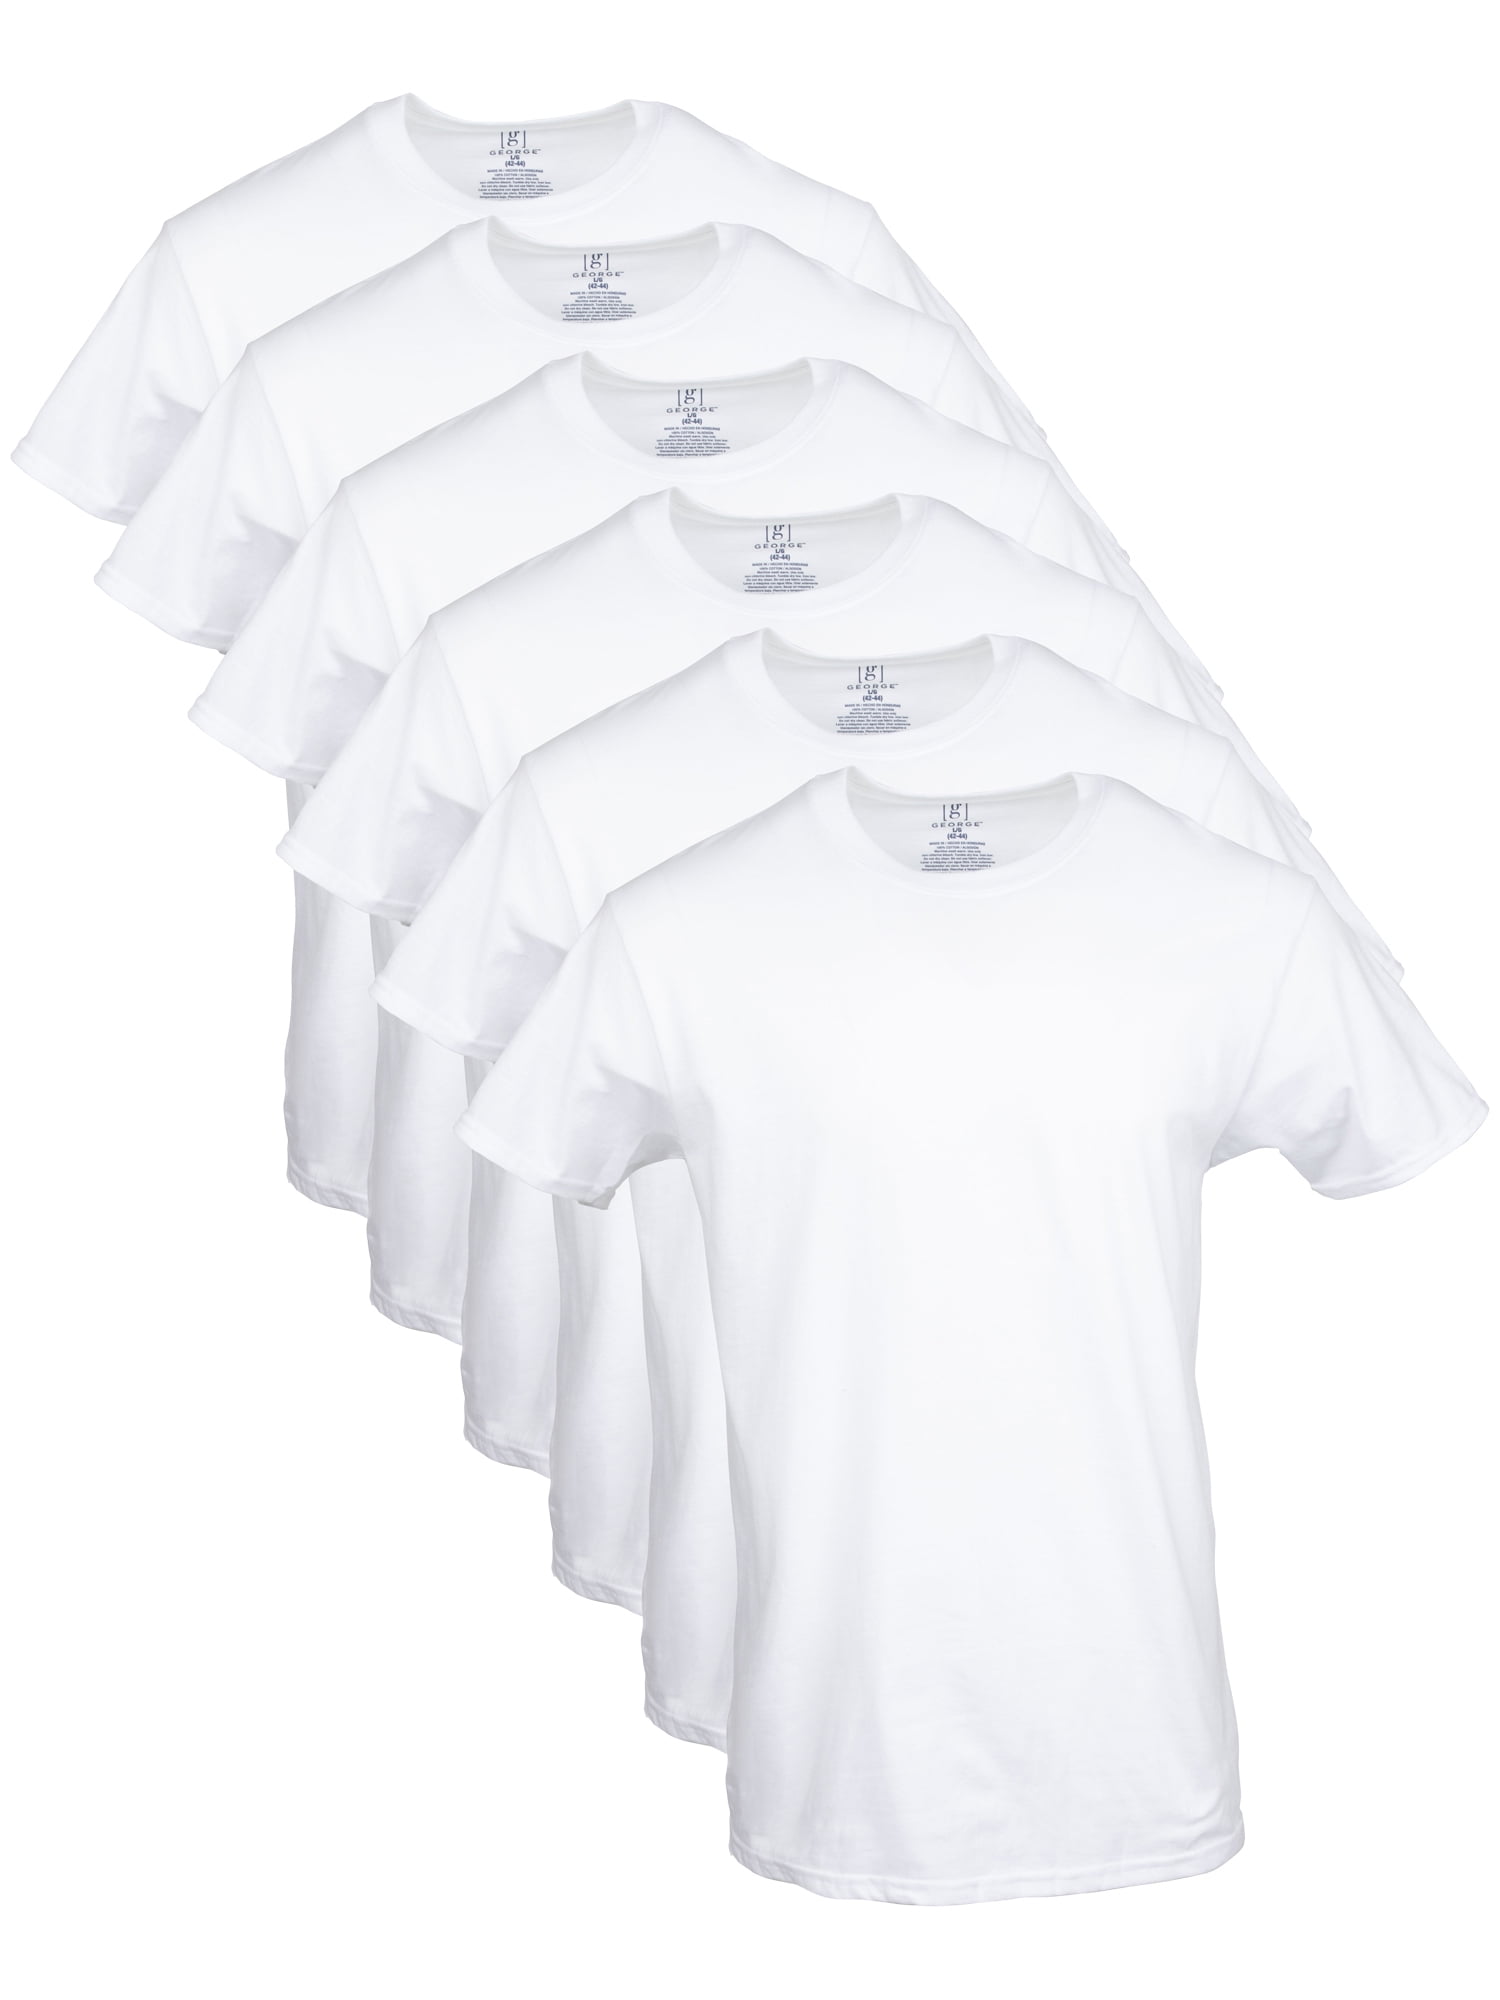 George Men's Crew T-Shirts, 6-Pack - Walmart.com